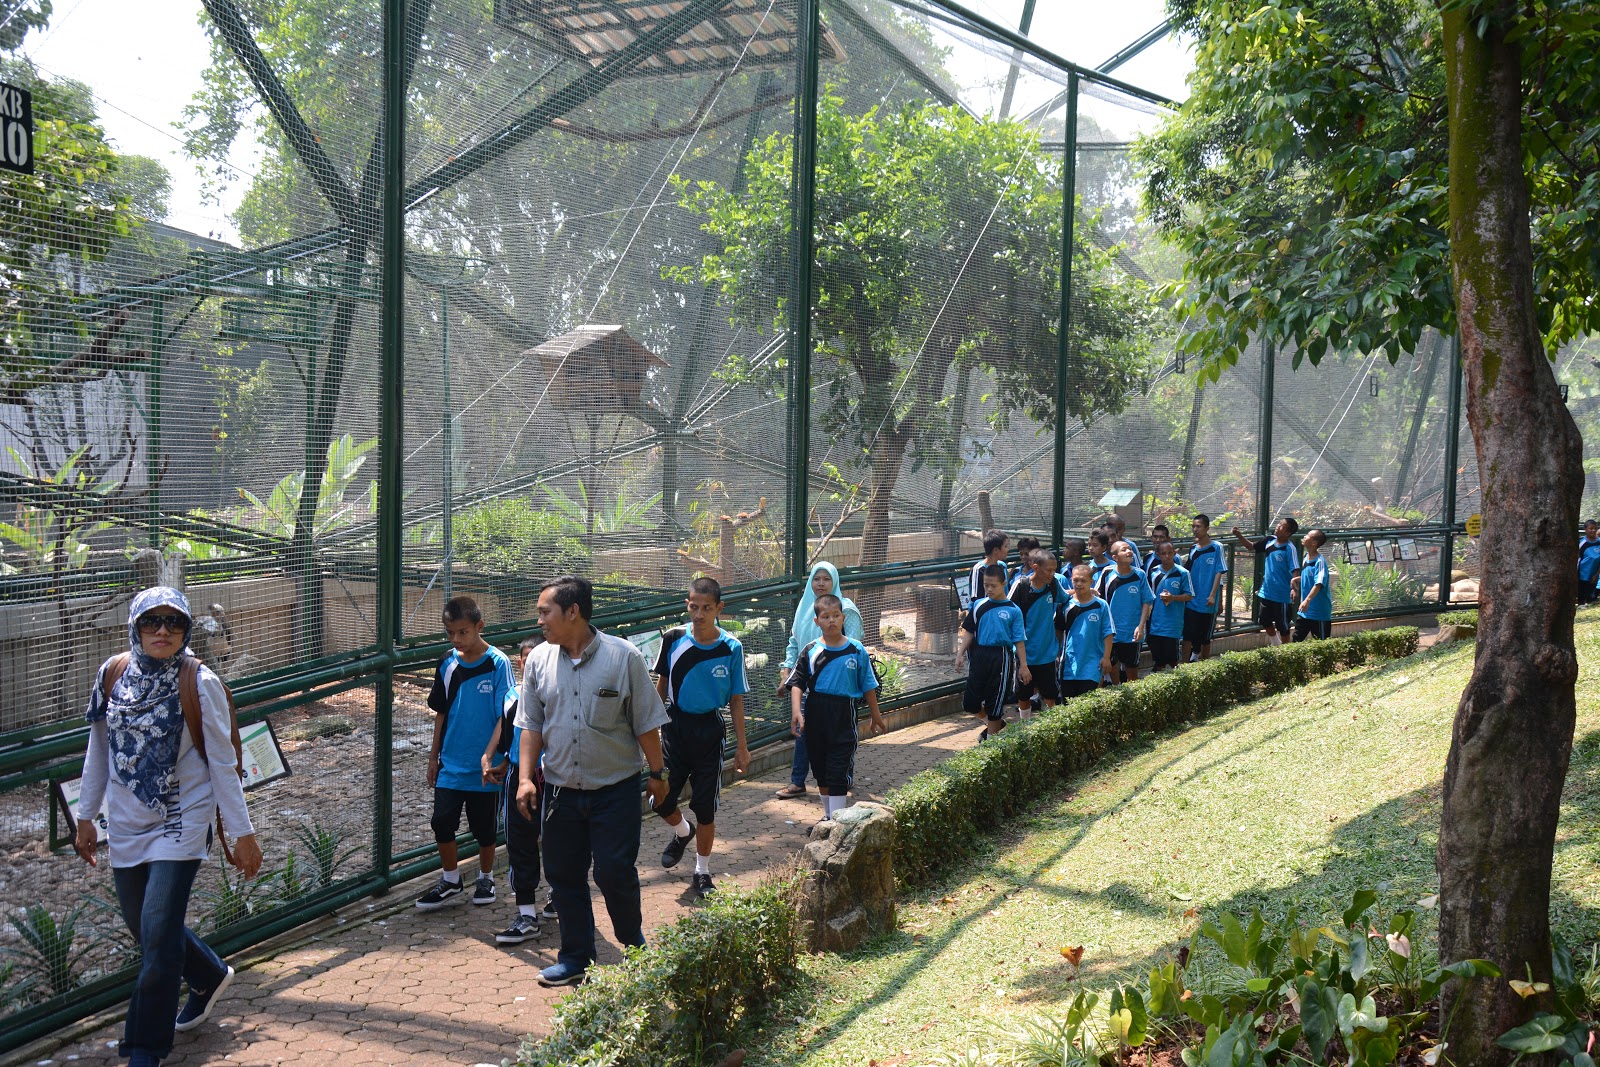 Senangnya Bermain Sambil Belajar di Taman Mini Indonesia Indah